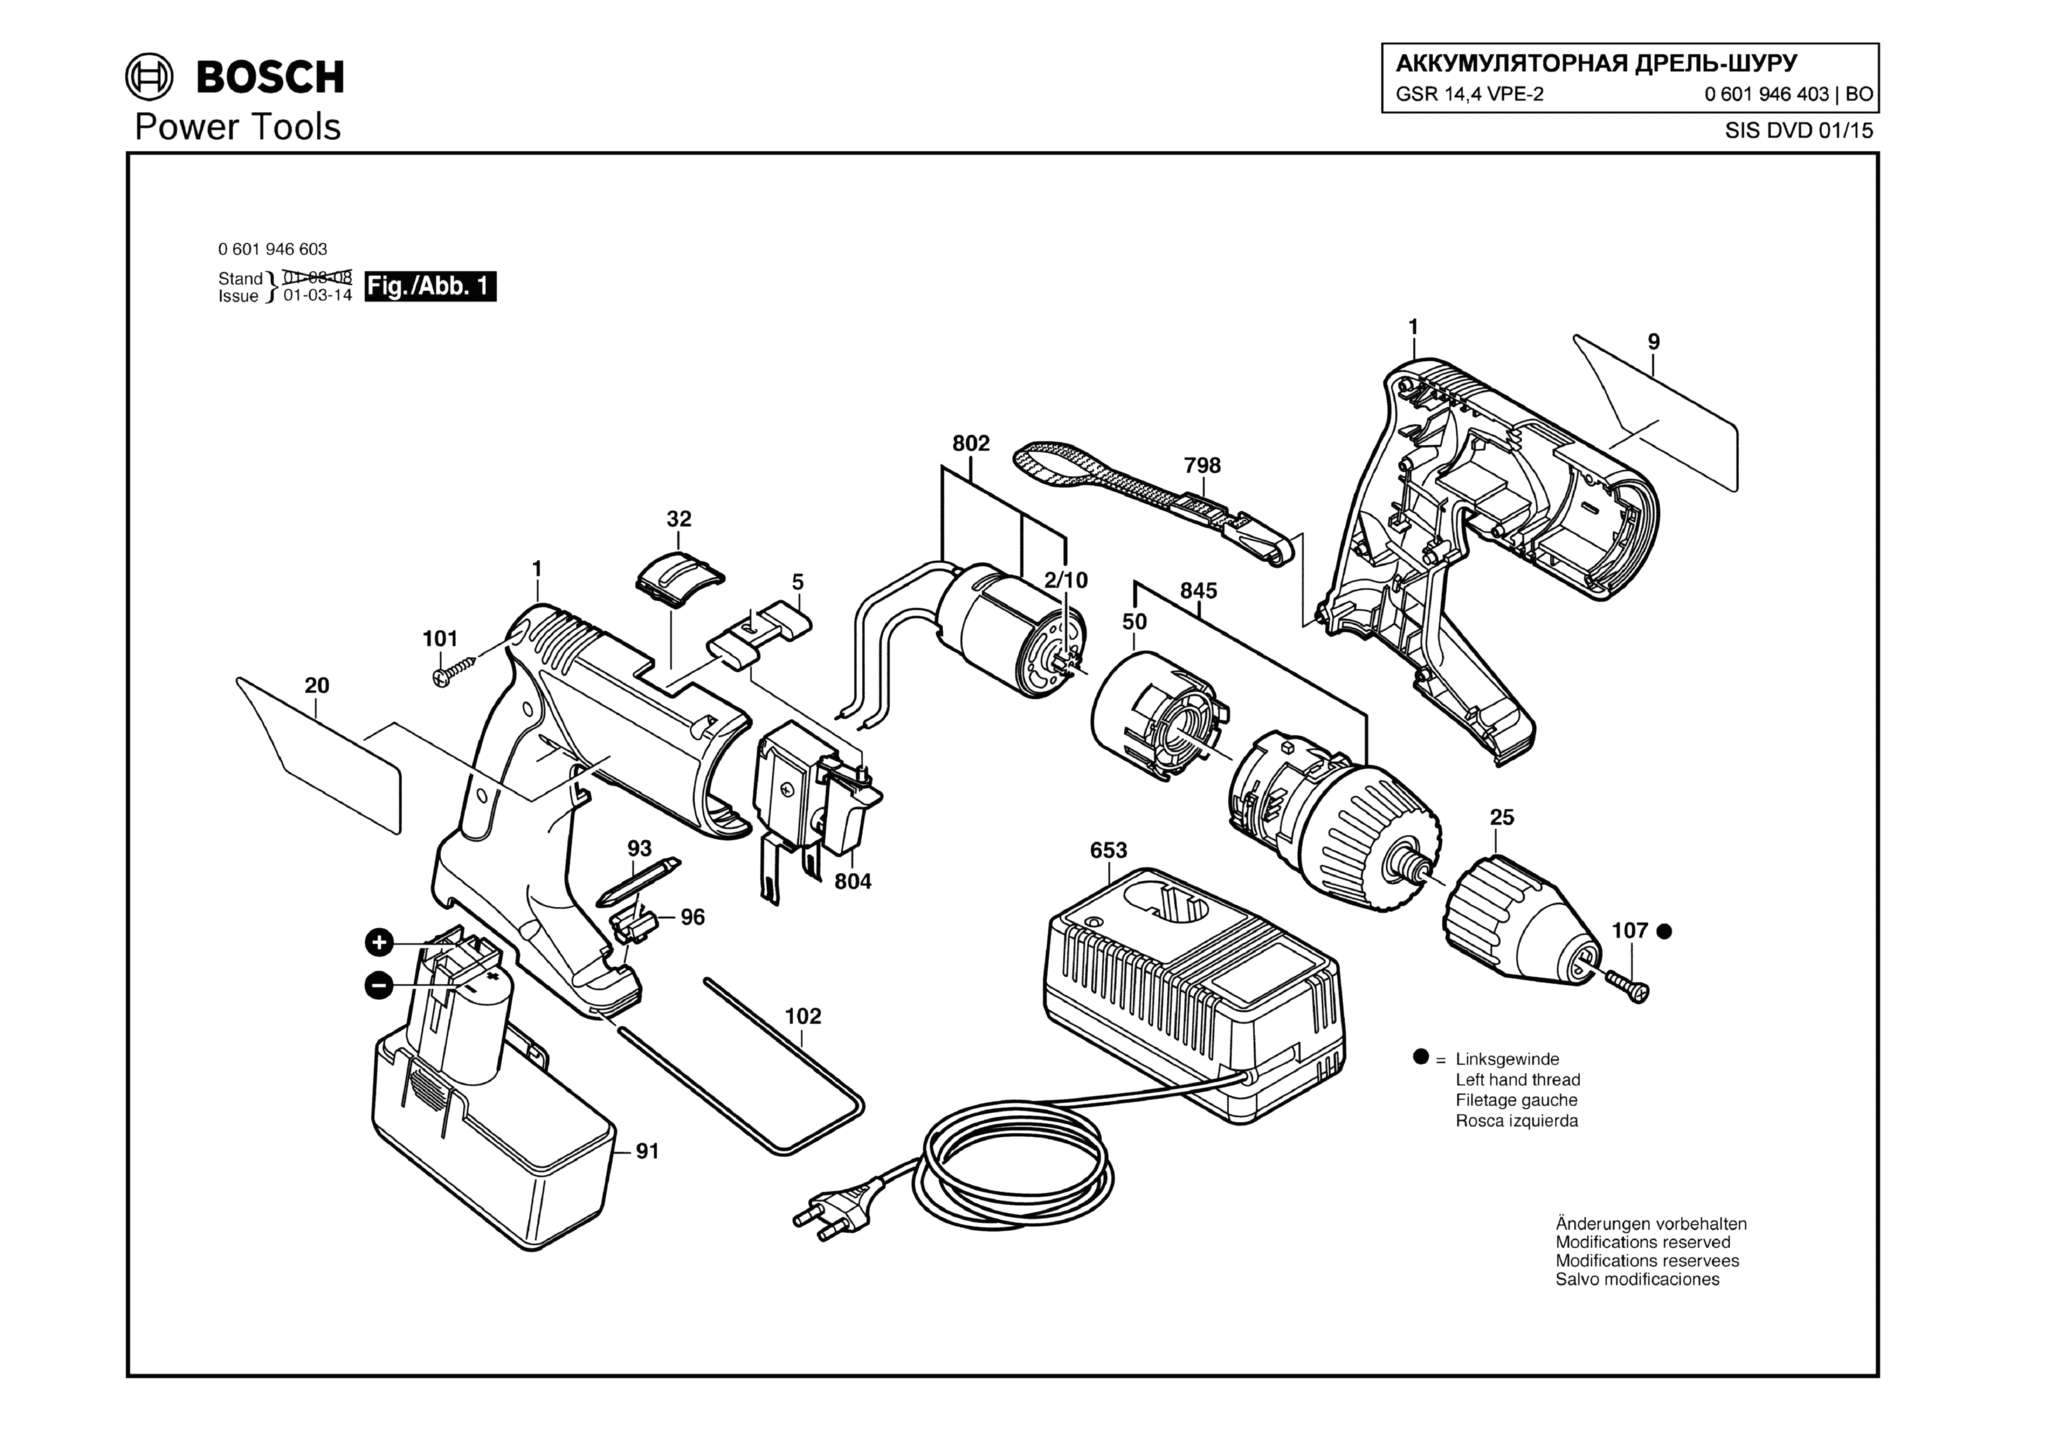 Запчасти, схема и деталировка Bosch GSR 14,4 VPE-2 (ТИП 0601946403)